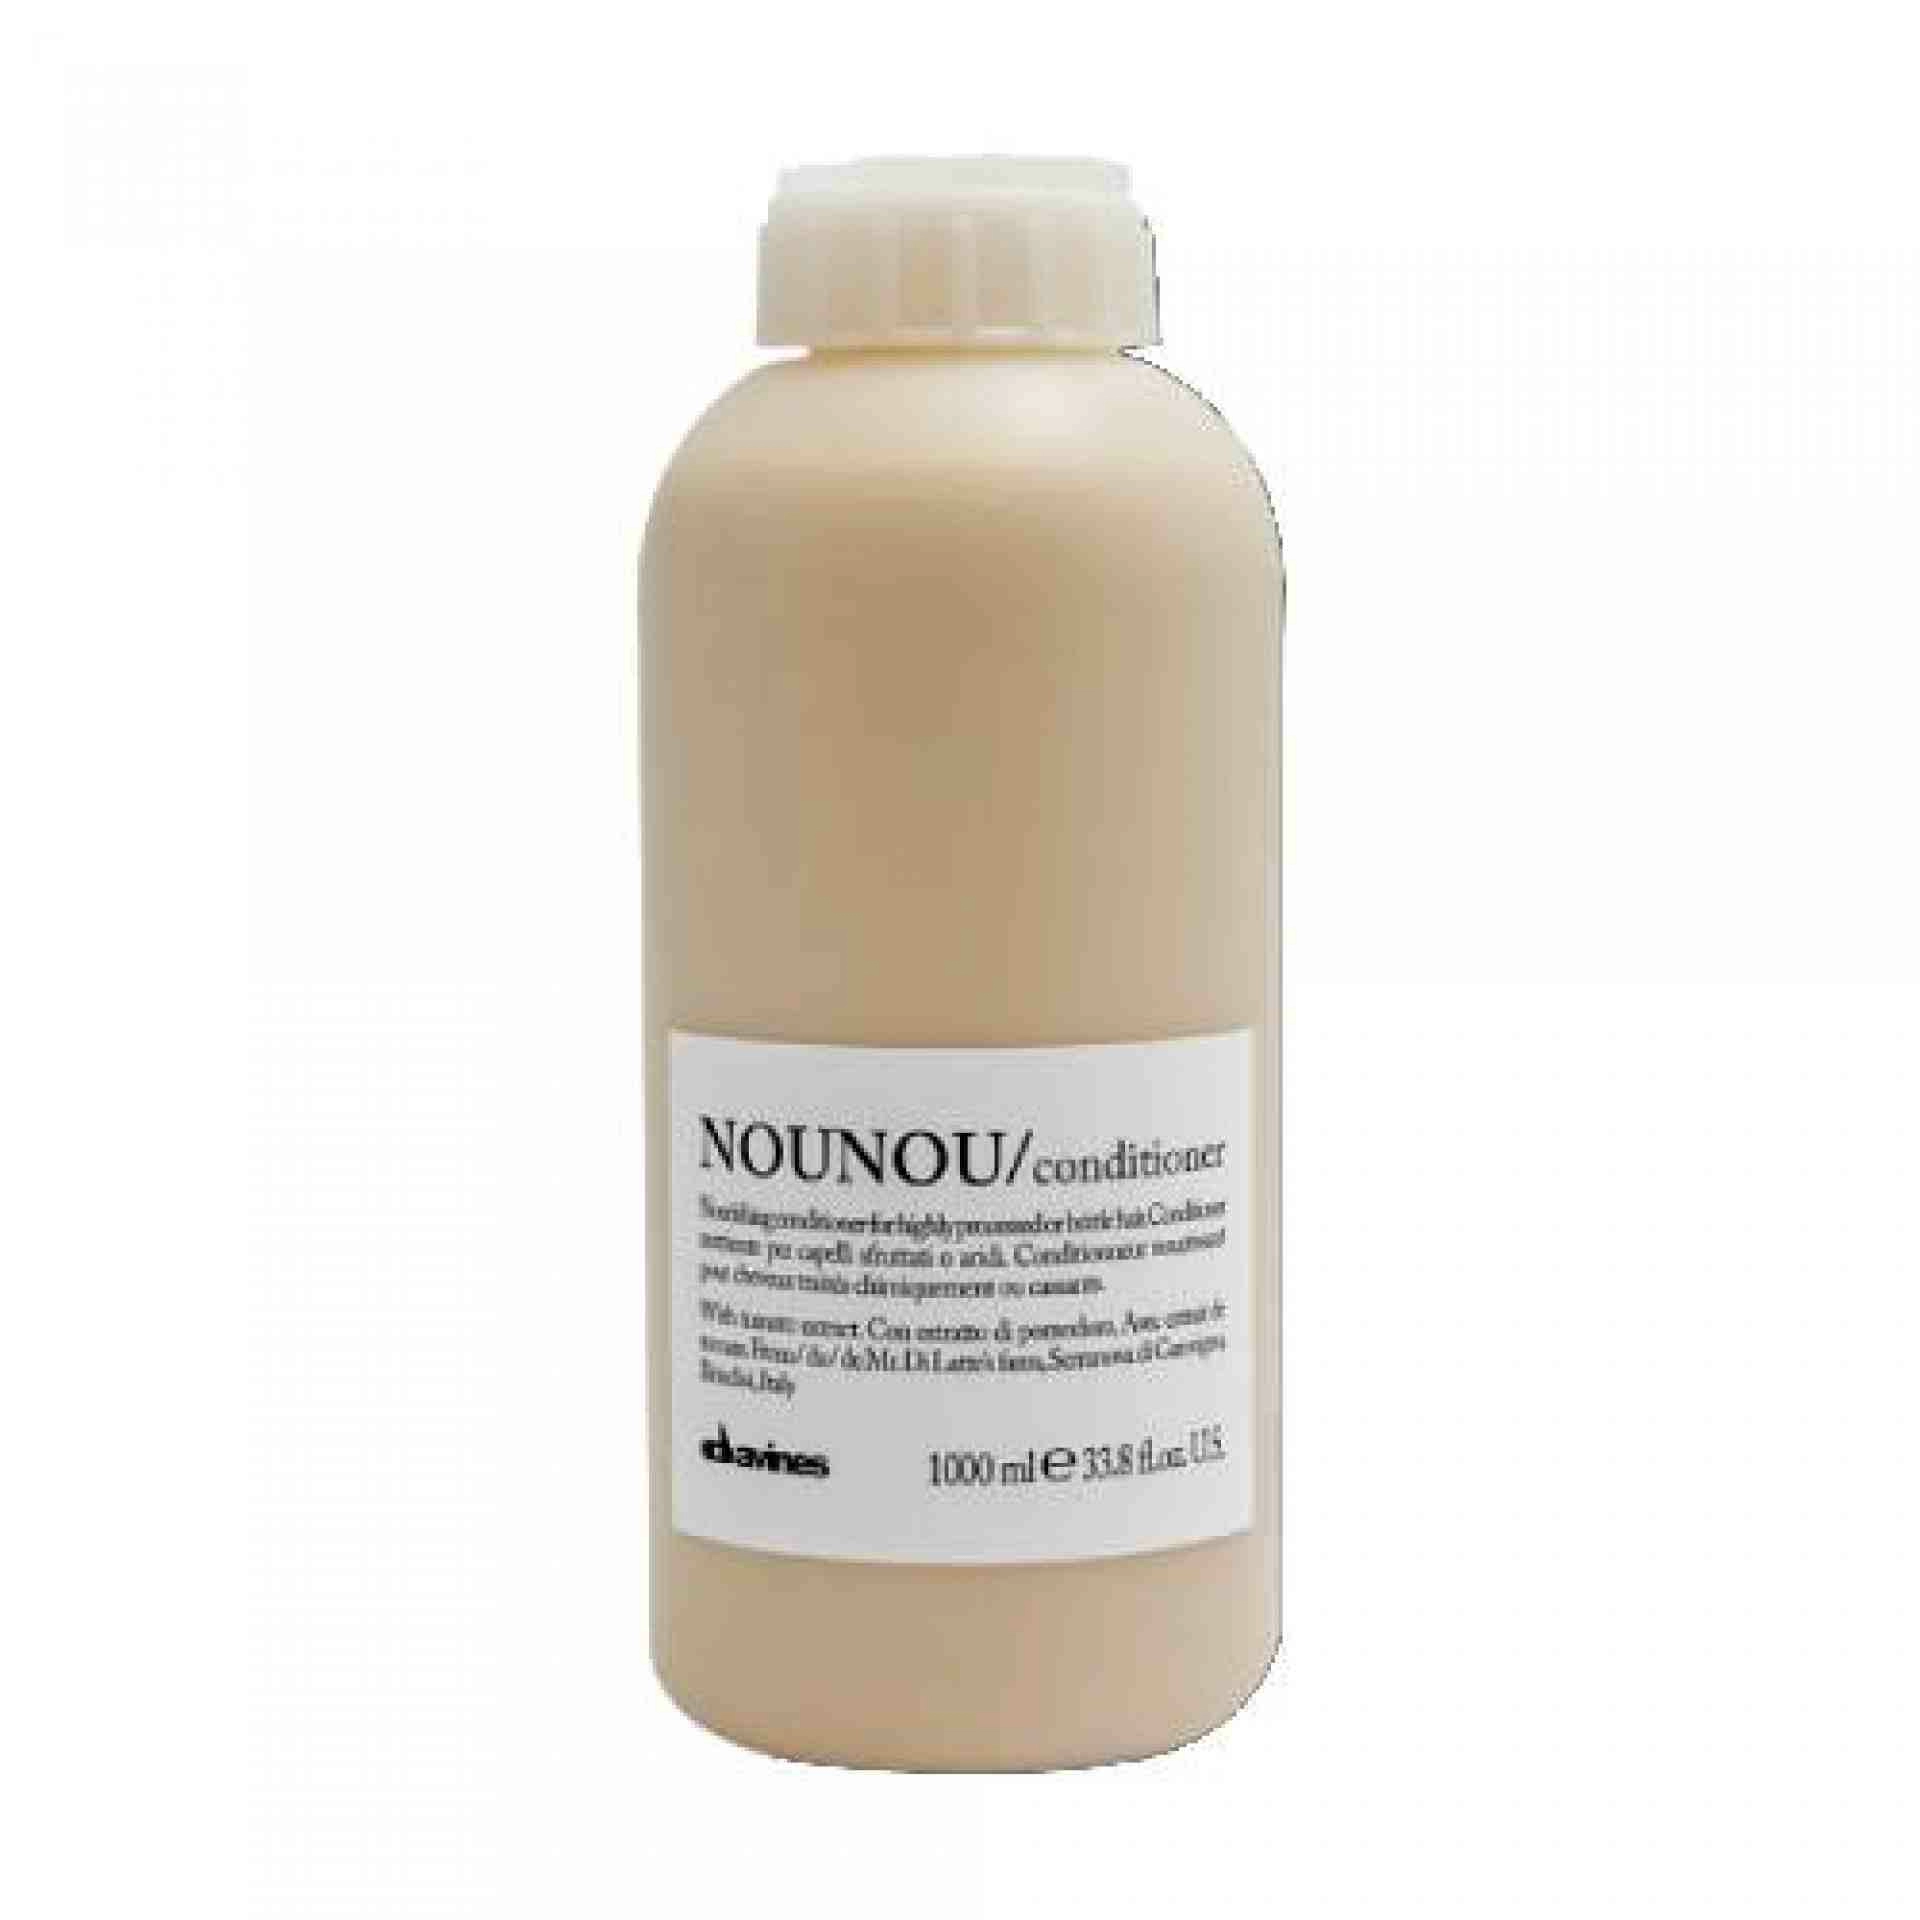 NOUNOU / Conditioner | Acondicionador nutritivo para pelo maltratado - Essential Haircare - Davines ®